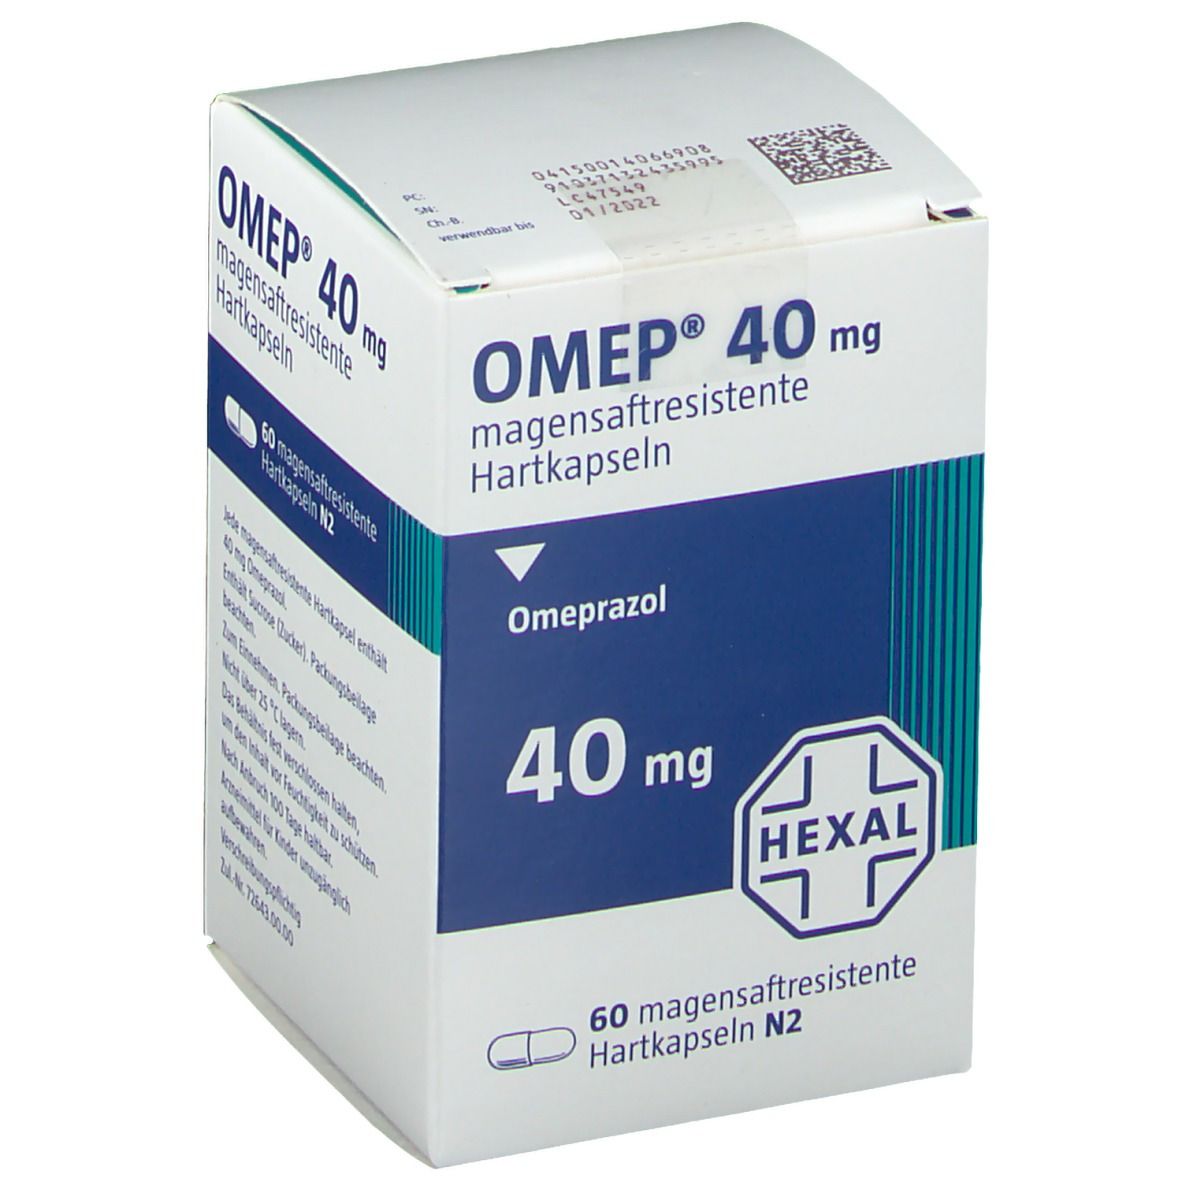 OMEP® 40 mg